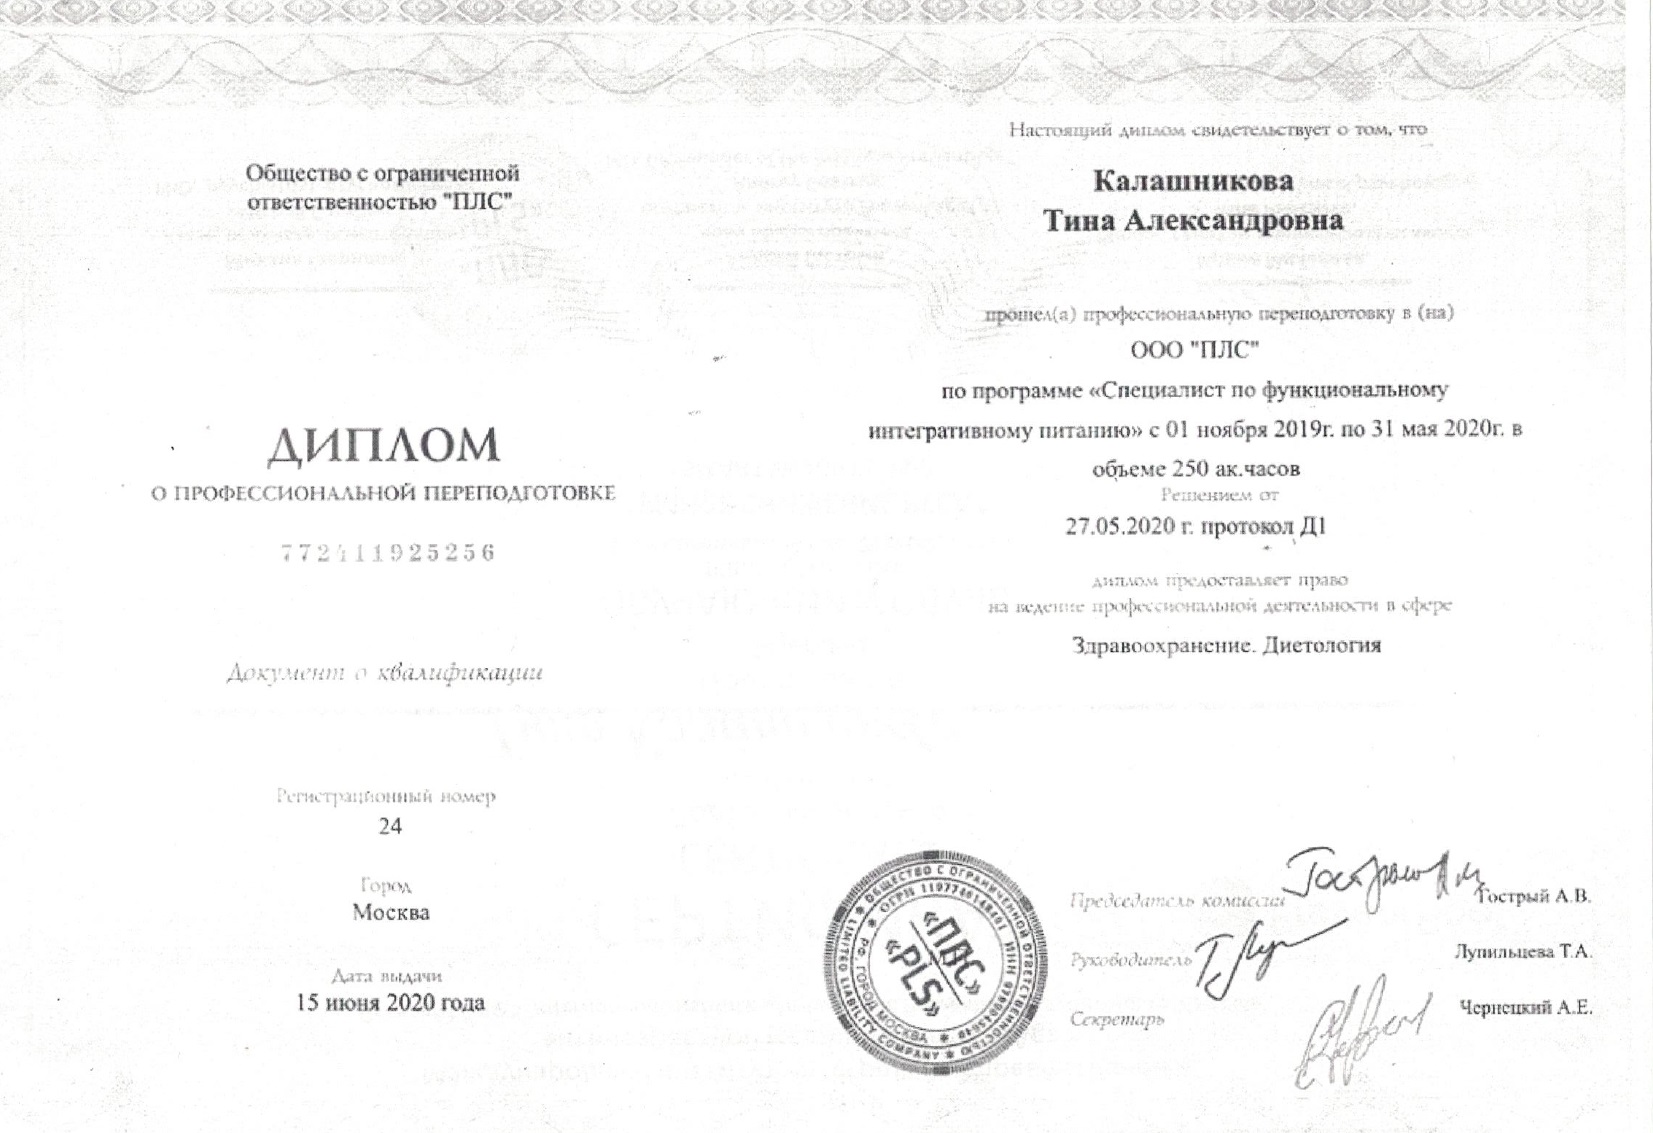 Скан диплома врача-диетолога, Калашникова Т. А. 2020 г.